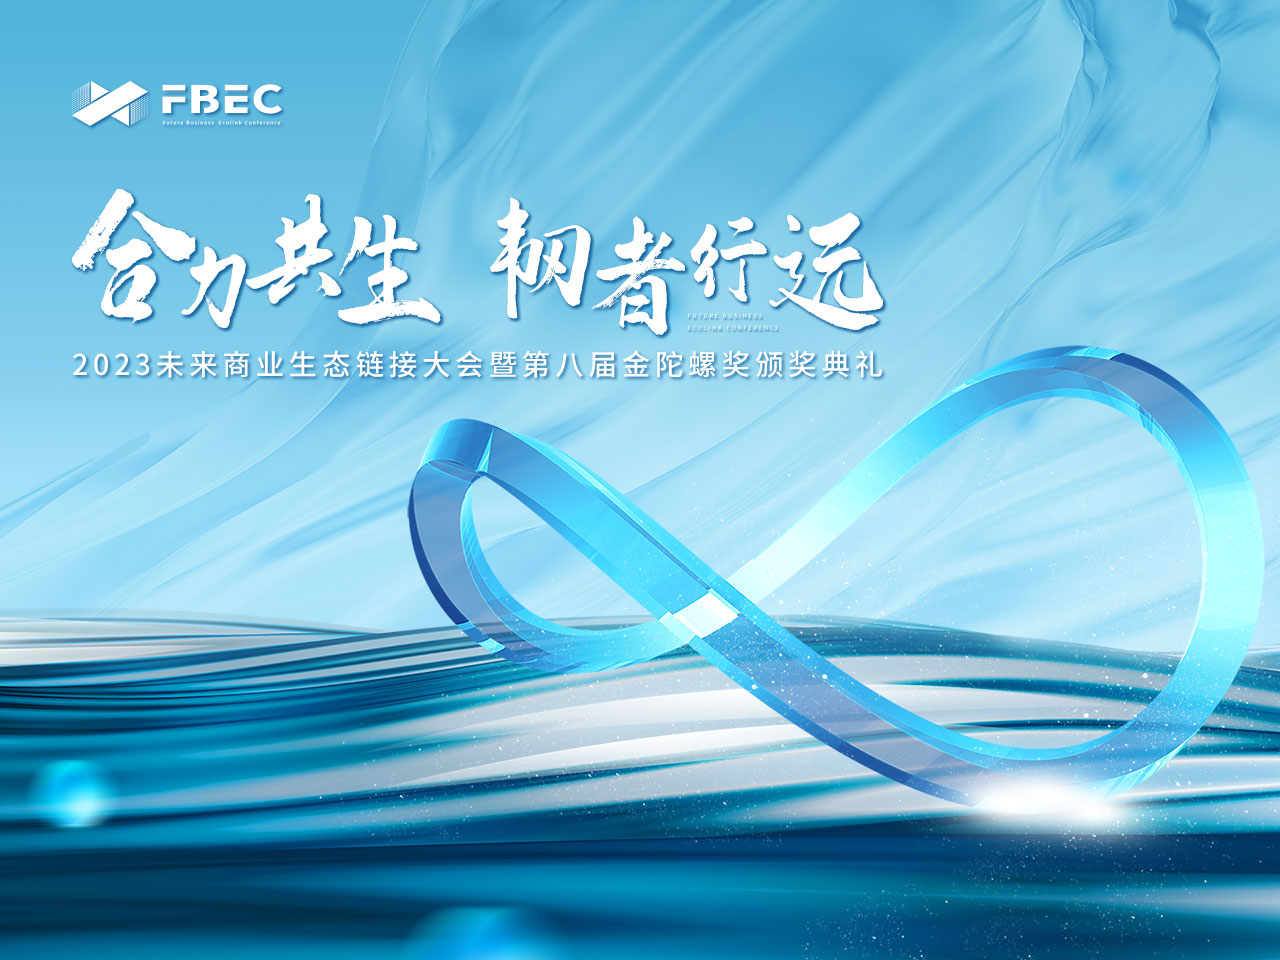 FBEC2023 | HTC 全球高级副总裁 鲍永哲确认出席并发表主题演讲